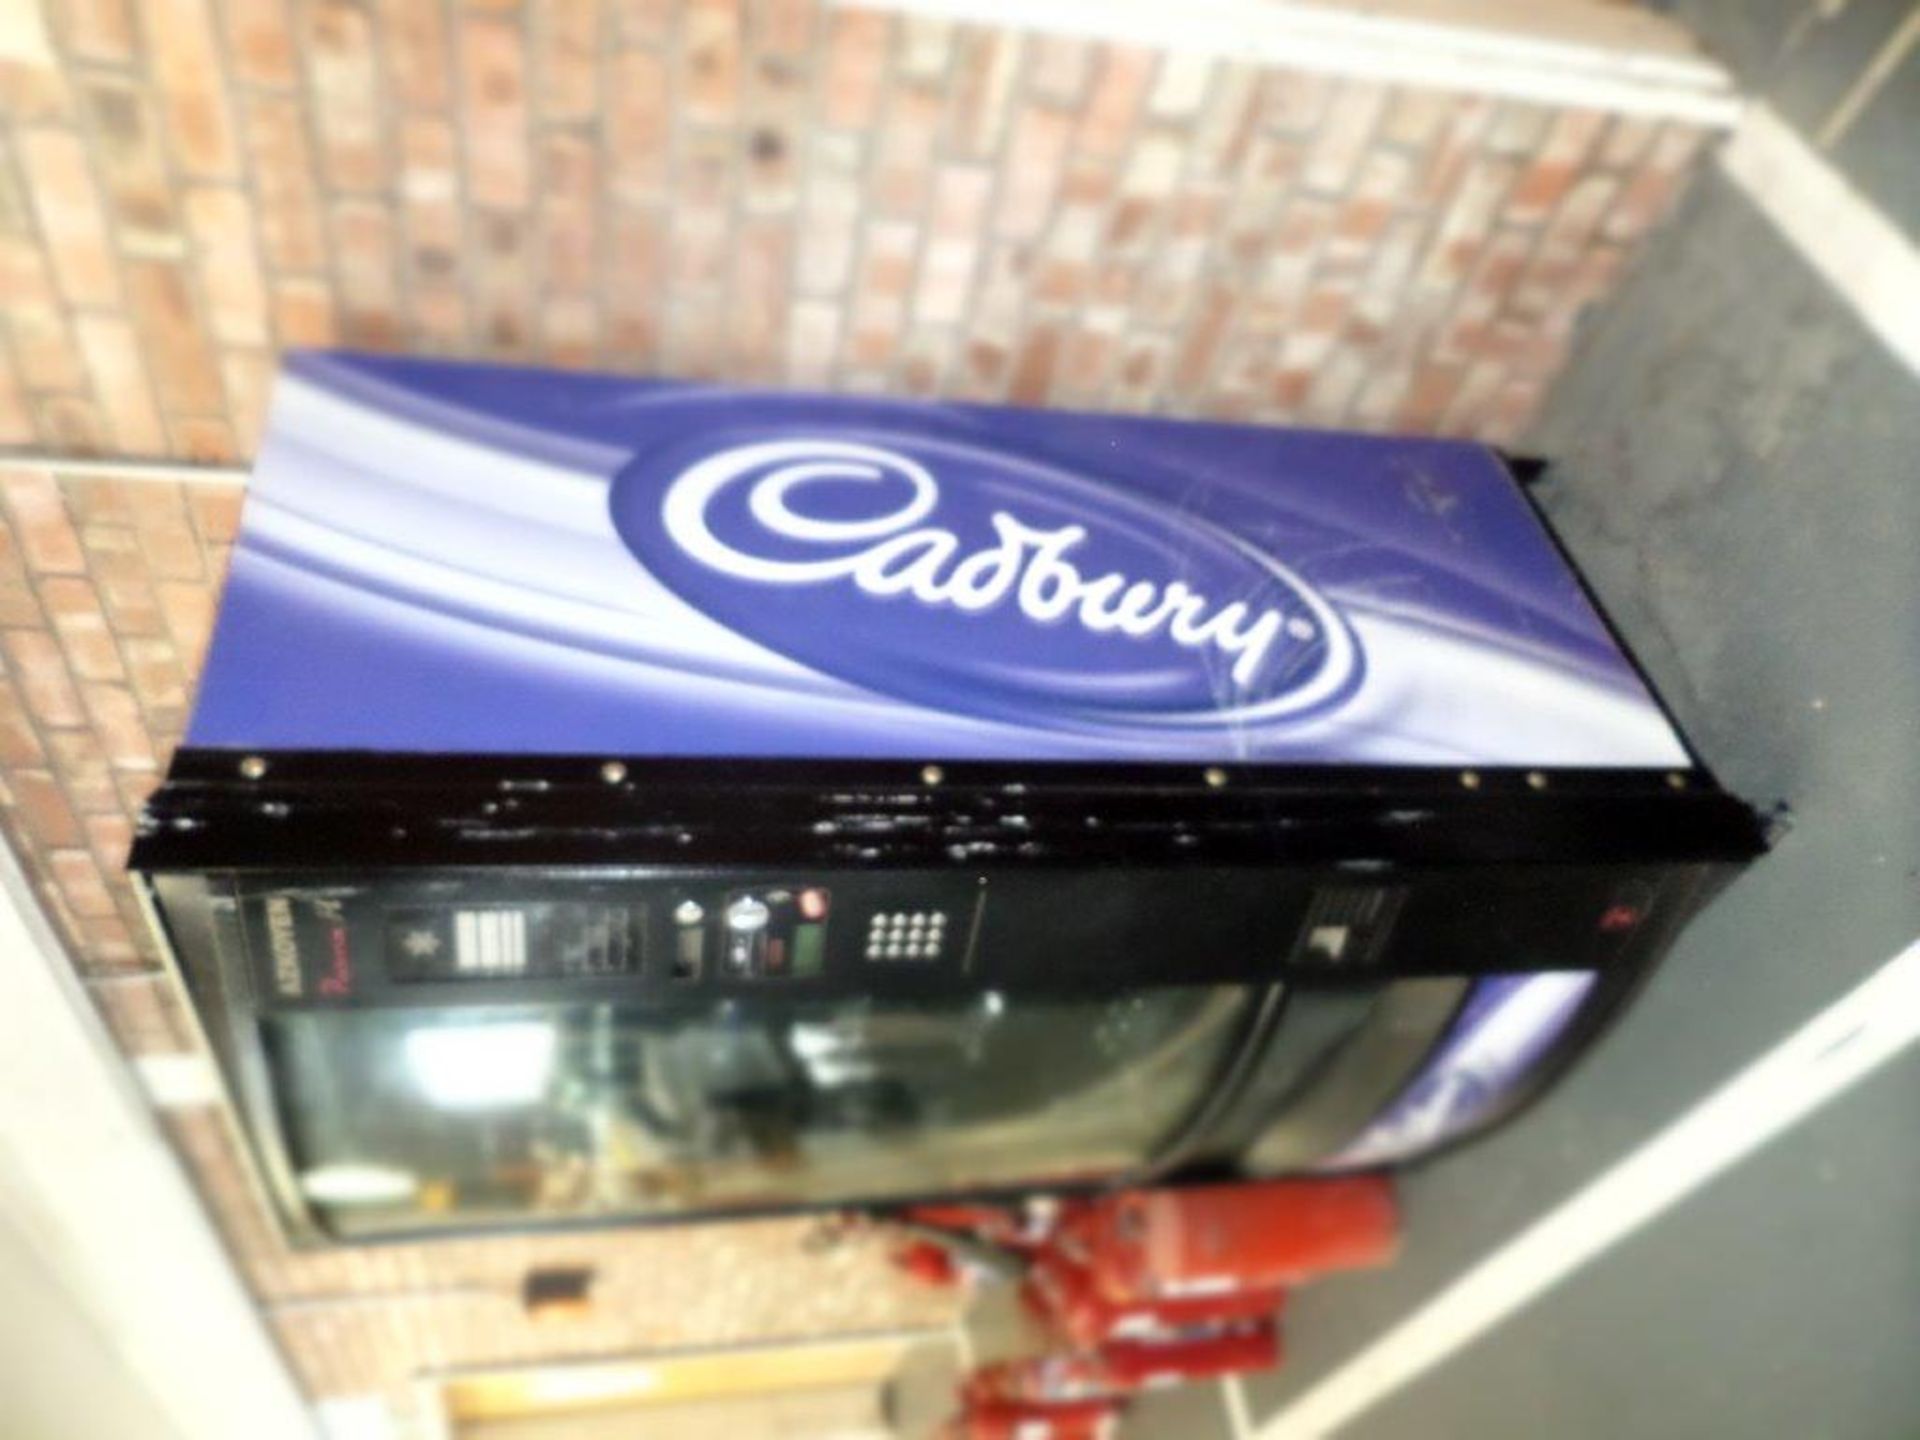 Cadbury Vending Machine - Image 2 of 2